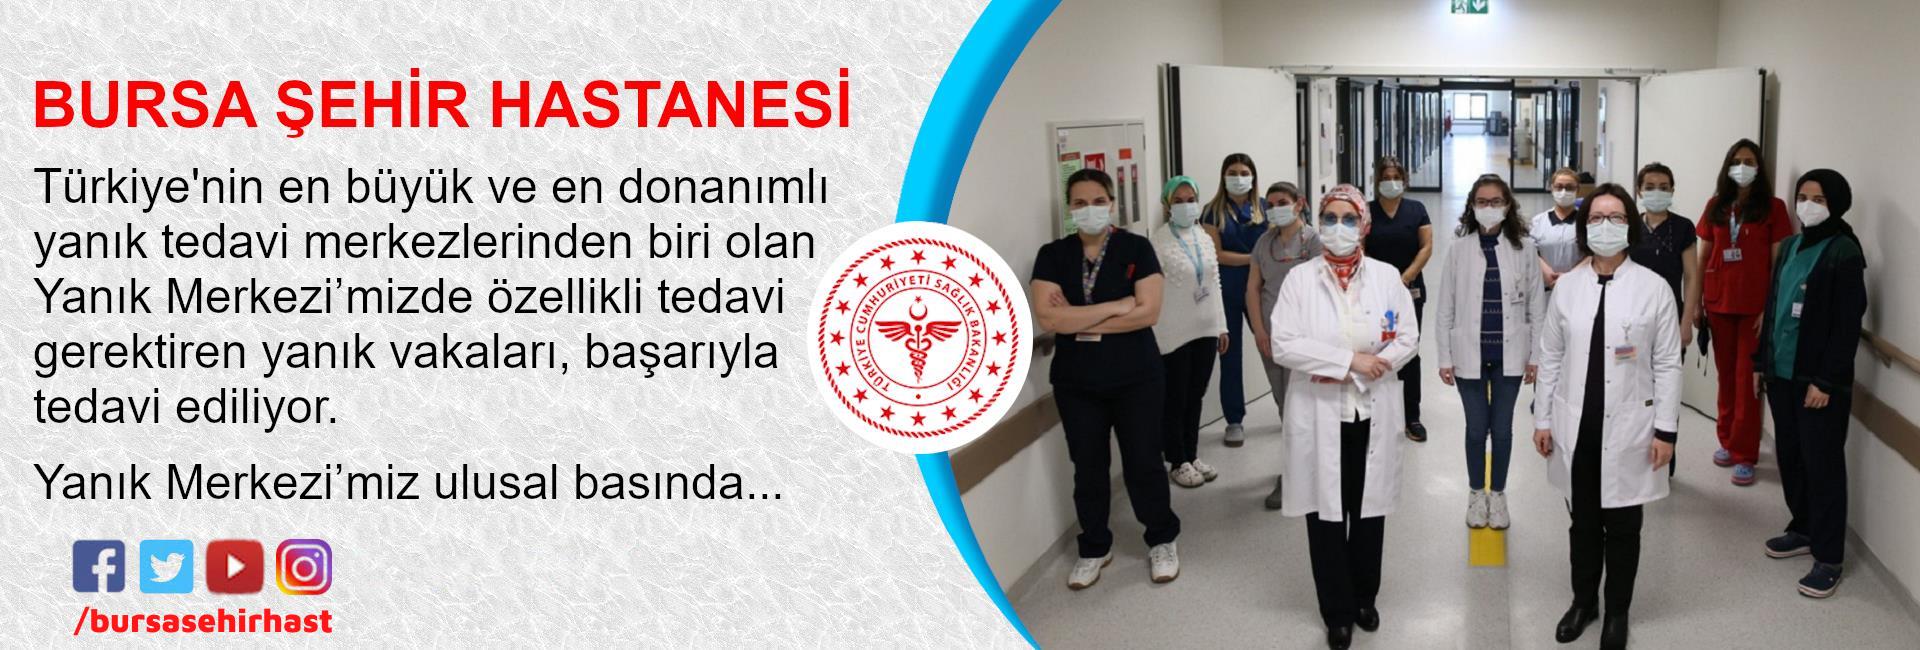 Bursa Şehir Hastanesi_34